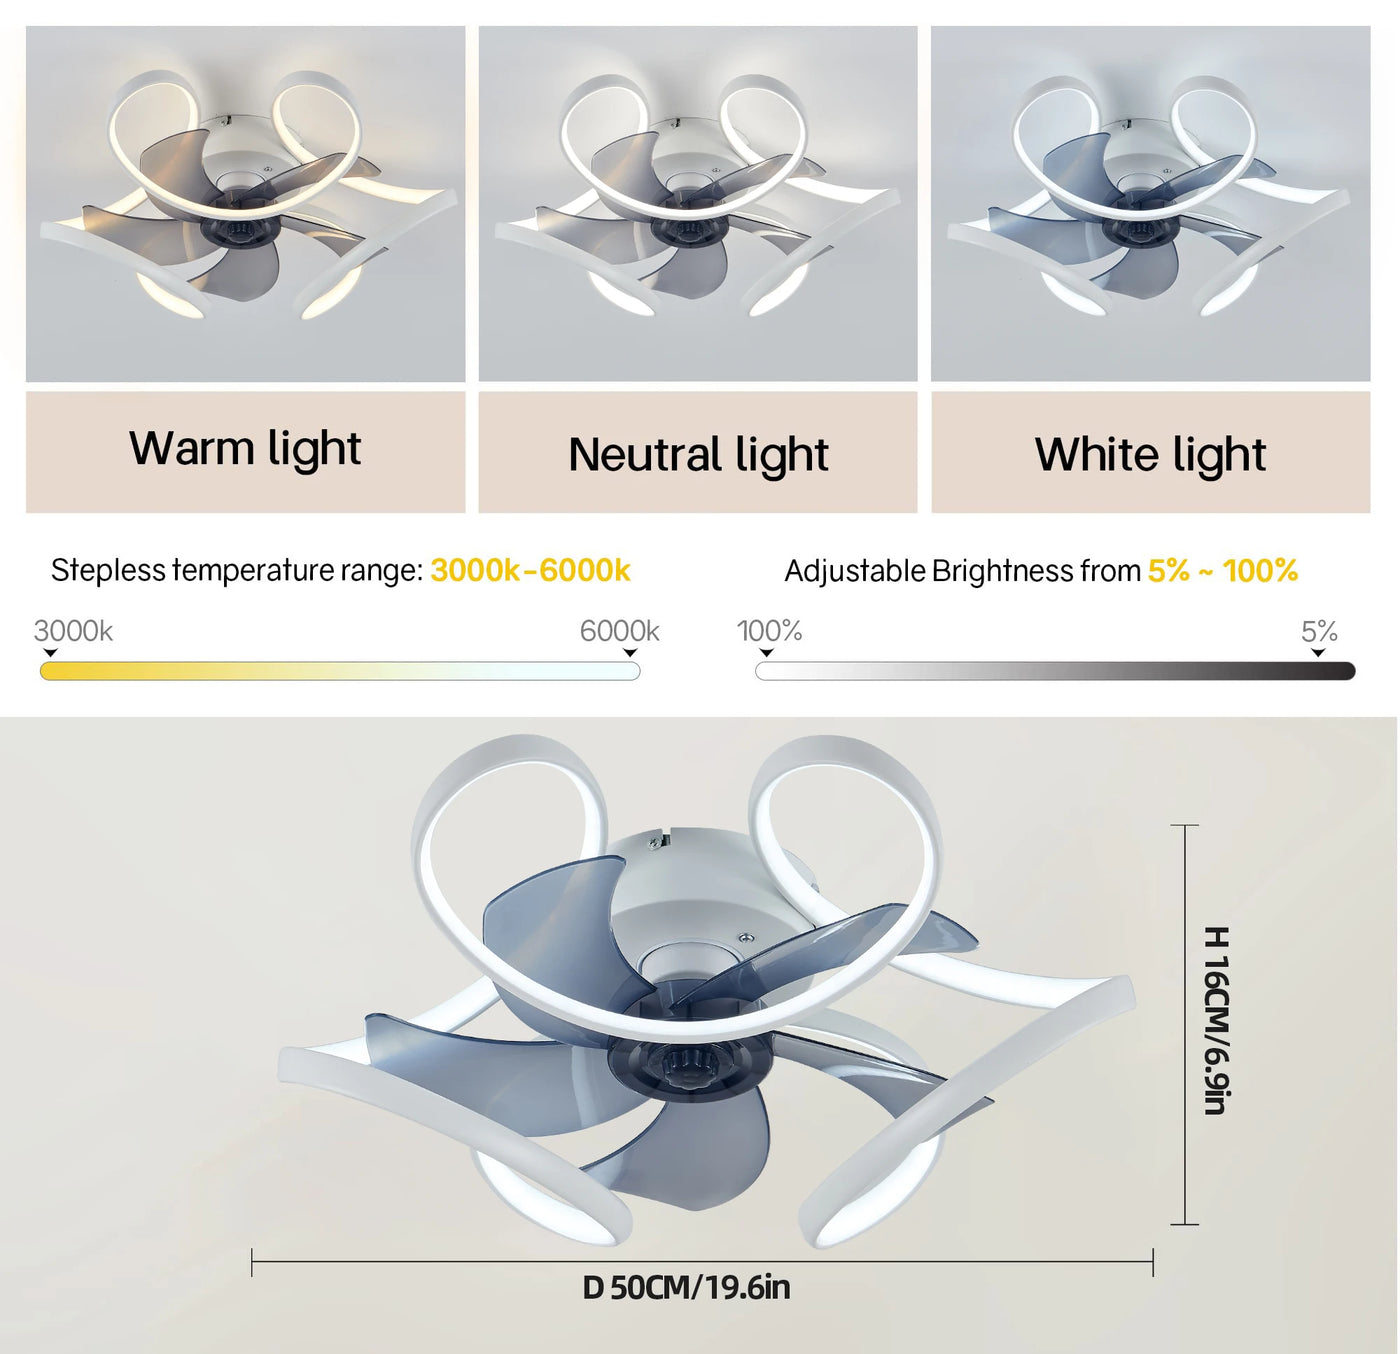 Smart Ceiling Fan with LED Lights: Remote Control Bedroom Decor Ventilator Lamp